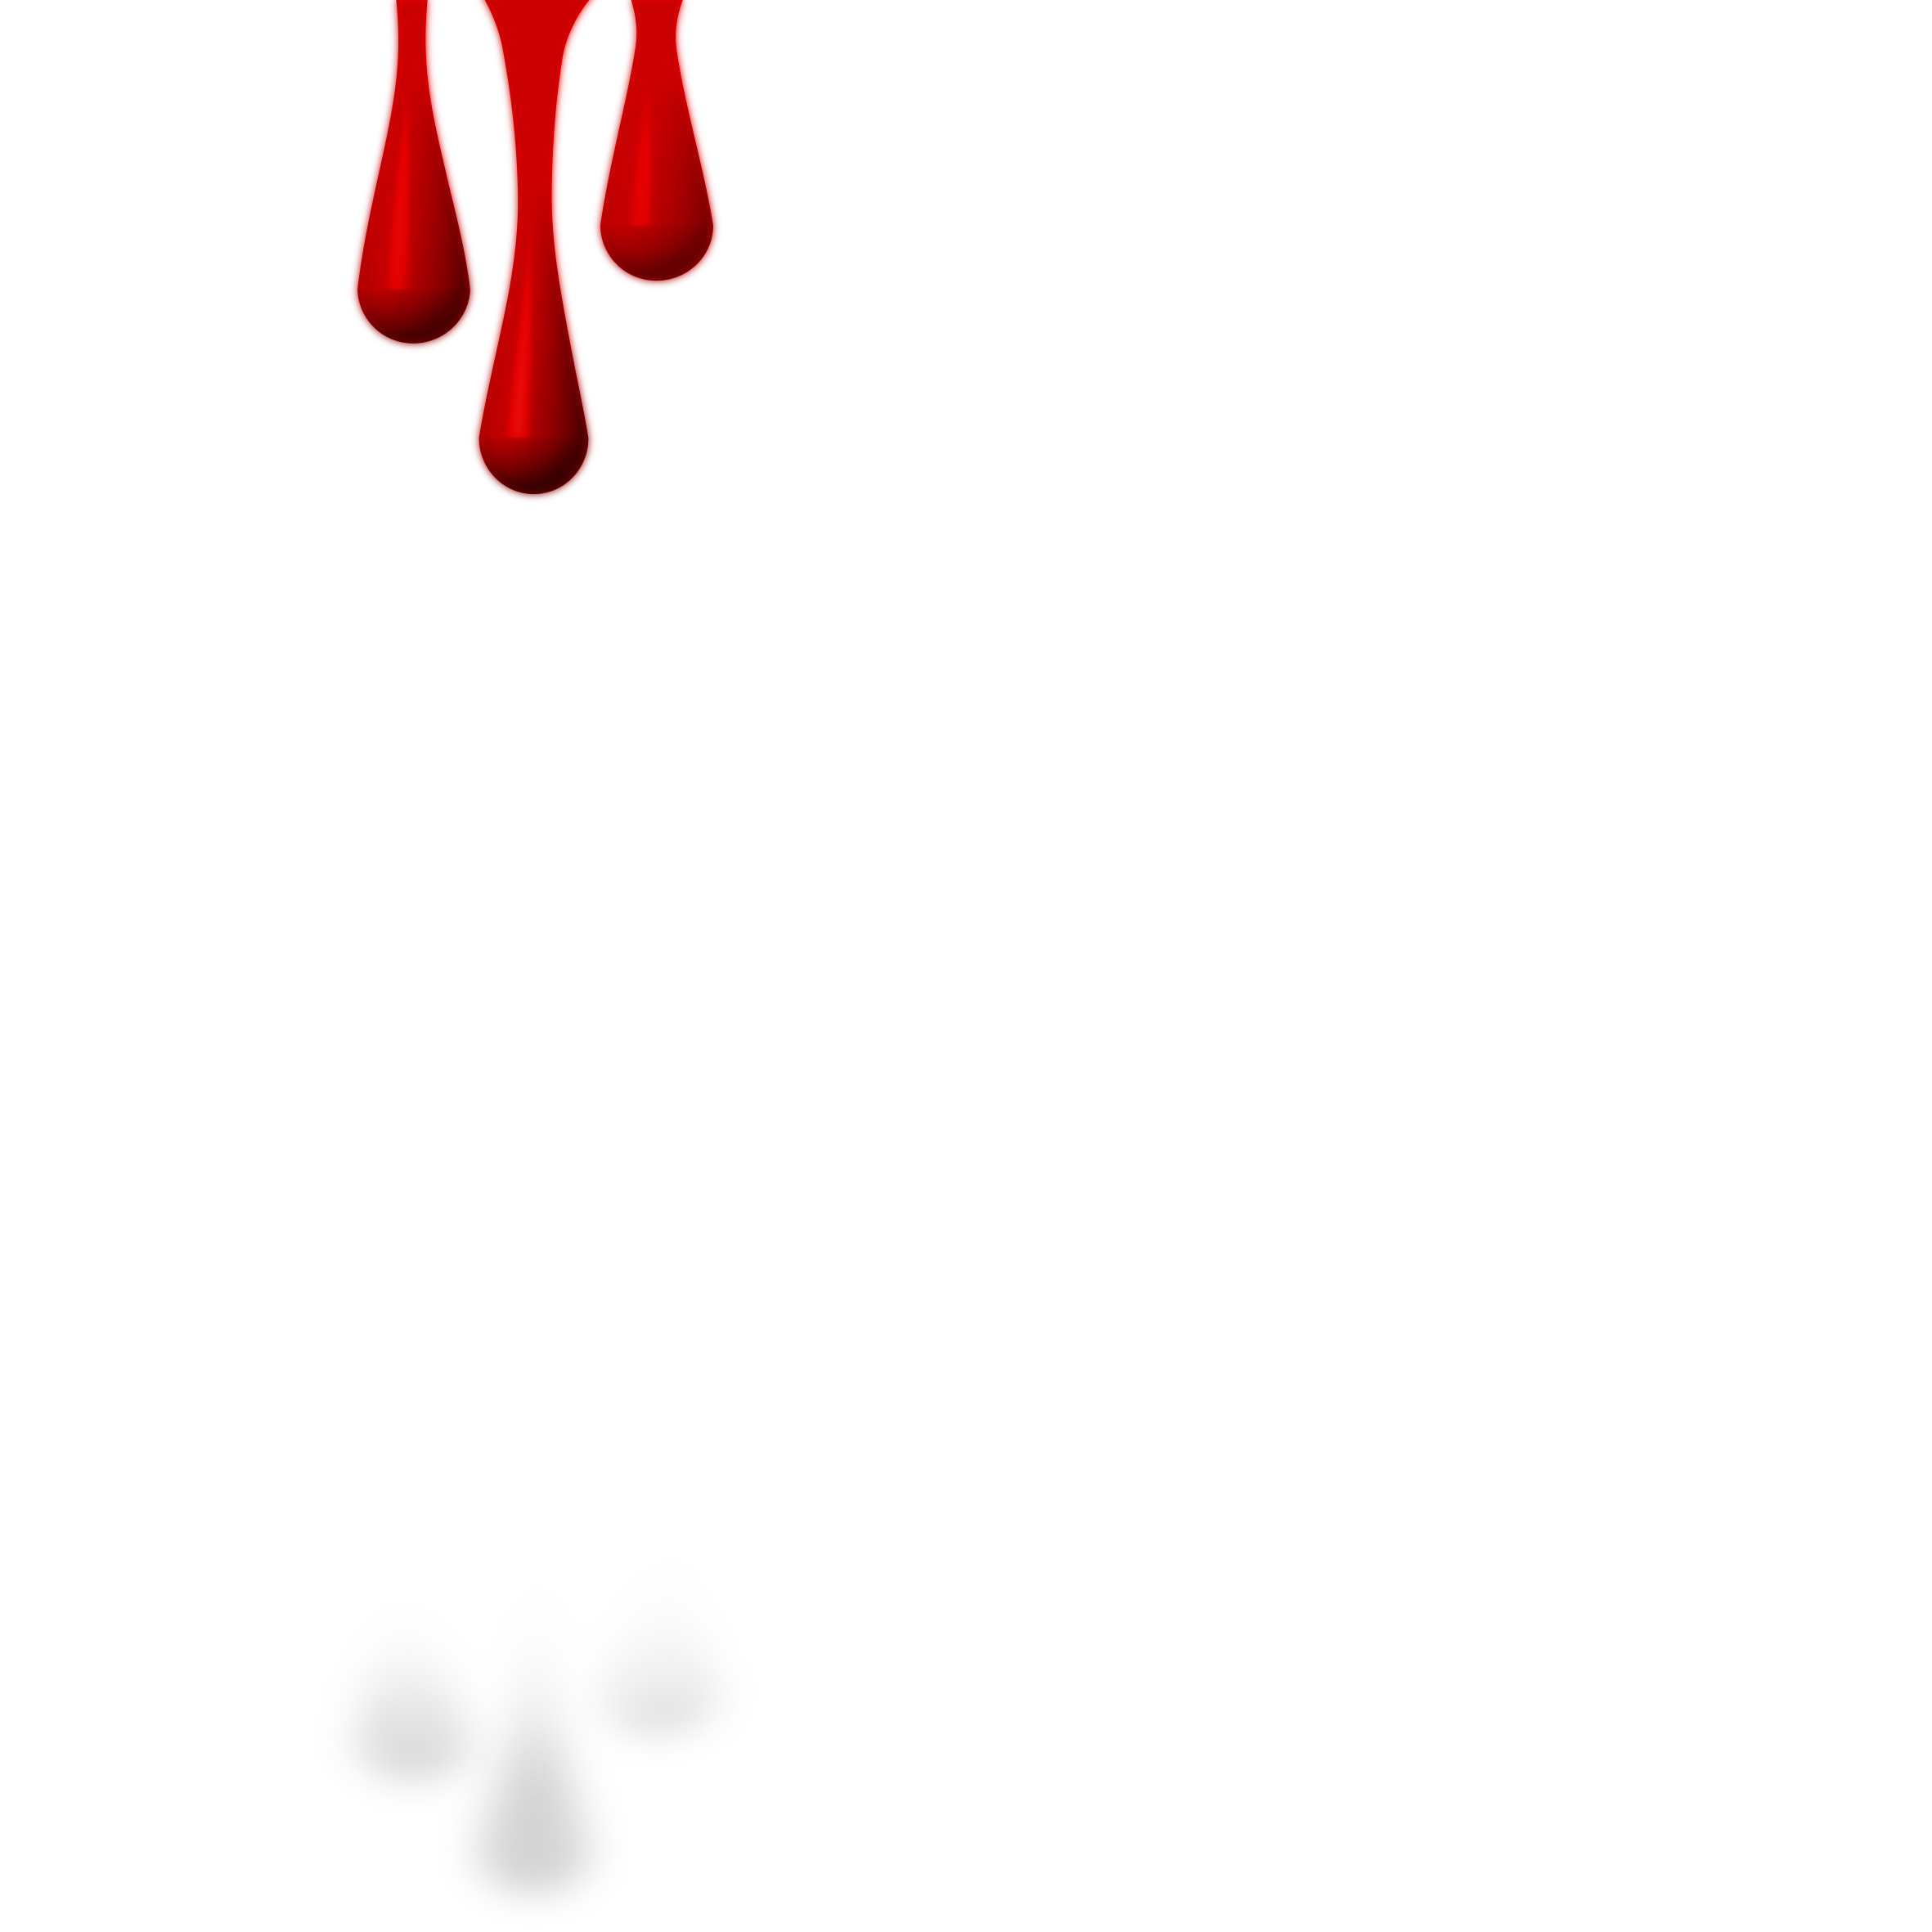 drop of blood by daddoo on DeviantArt